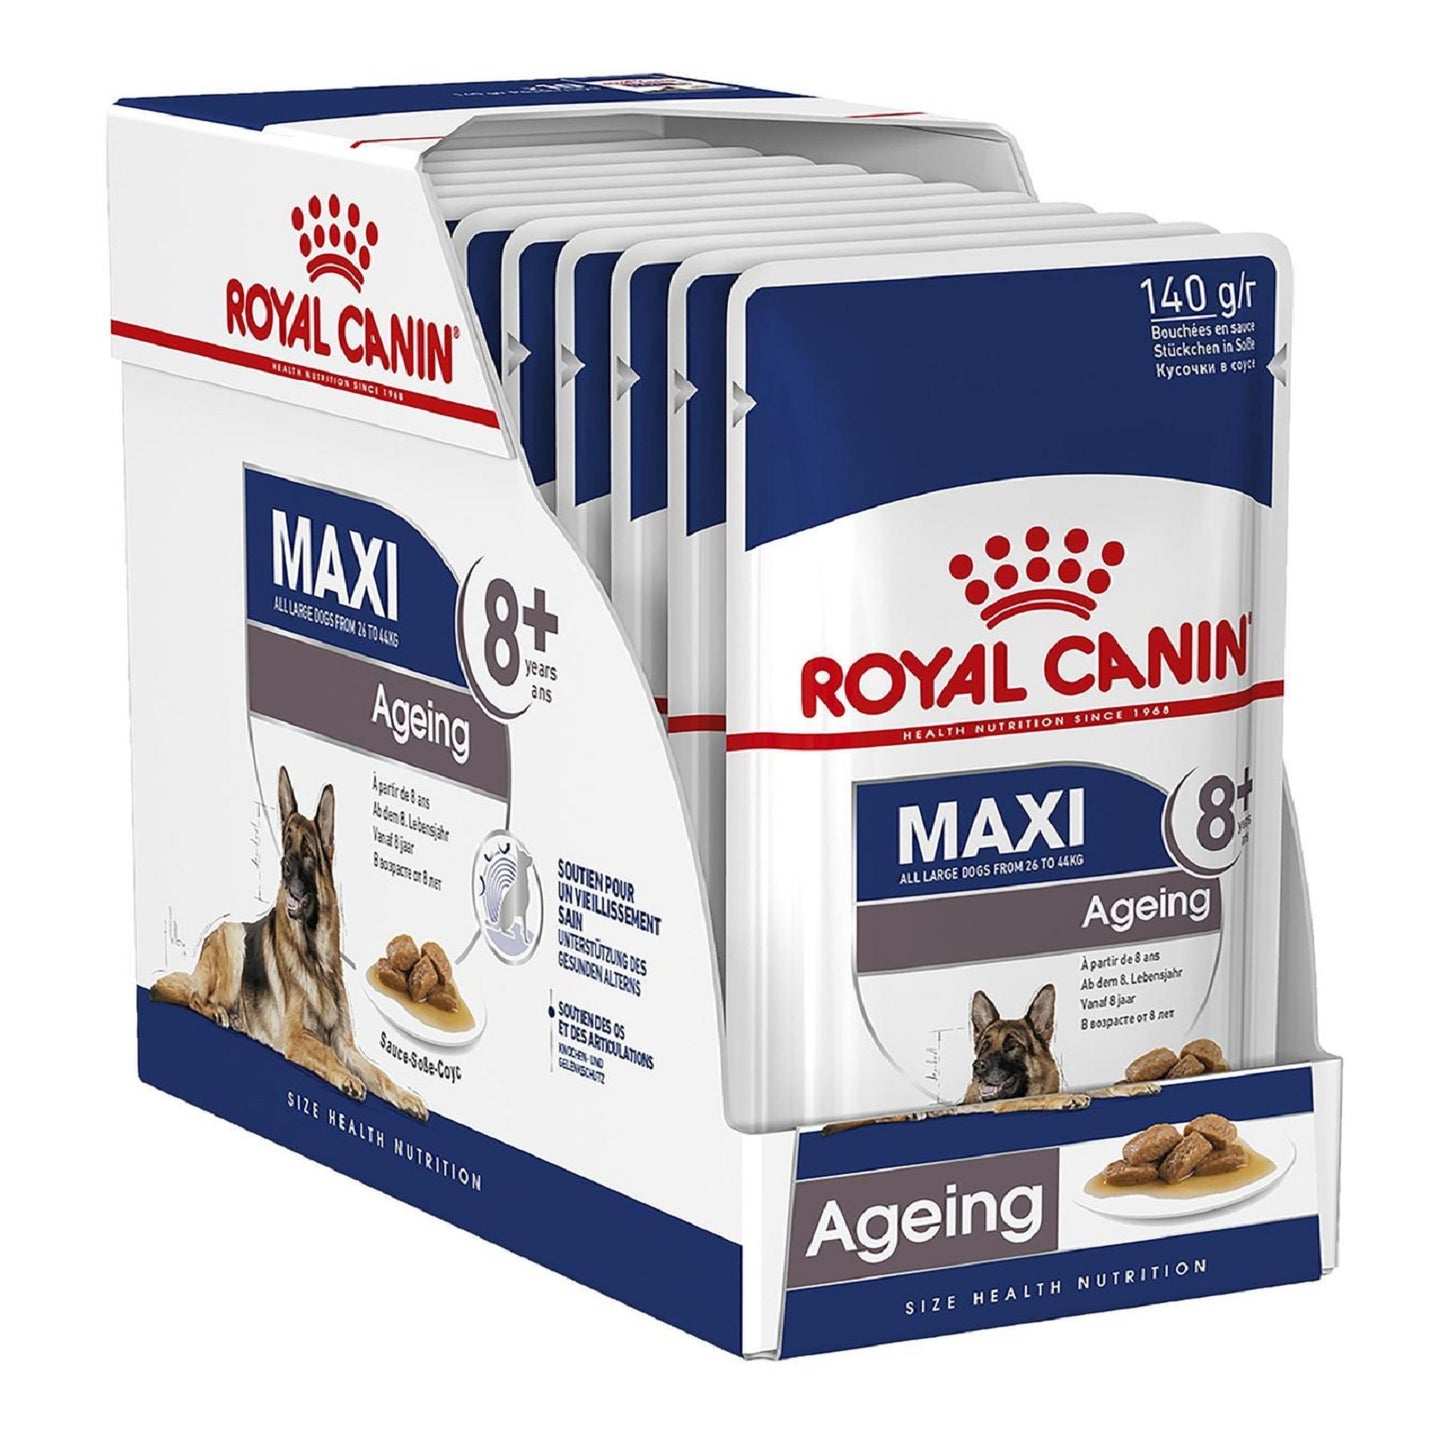 ROYAL CANIN - Maxi 8+ Ageing Pouches (10 x 140g)